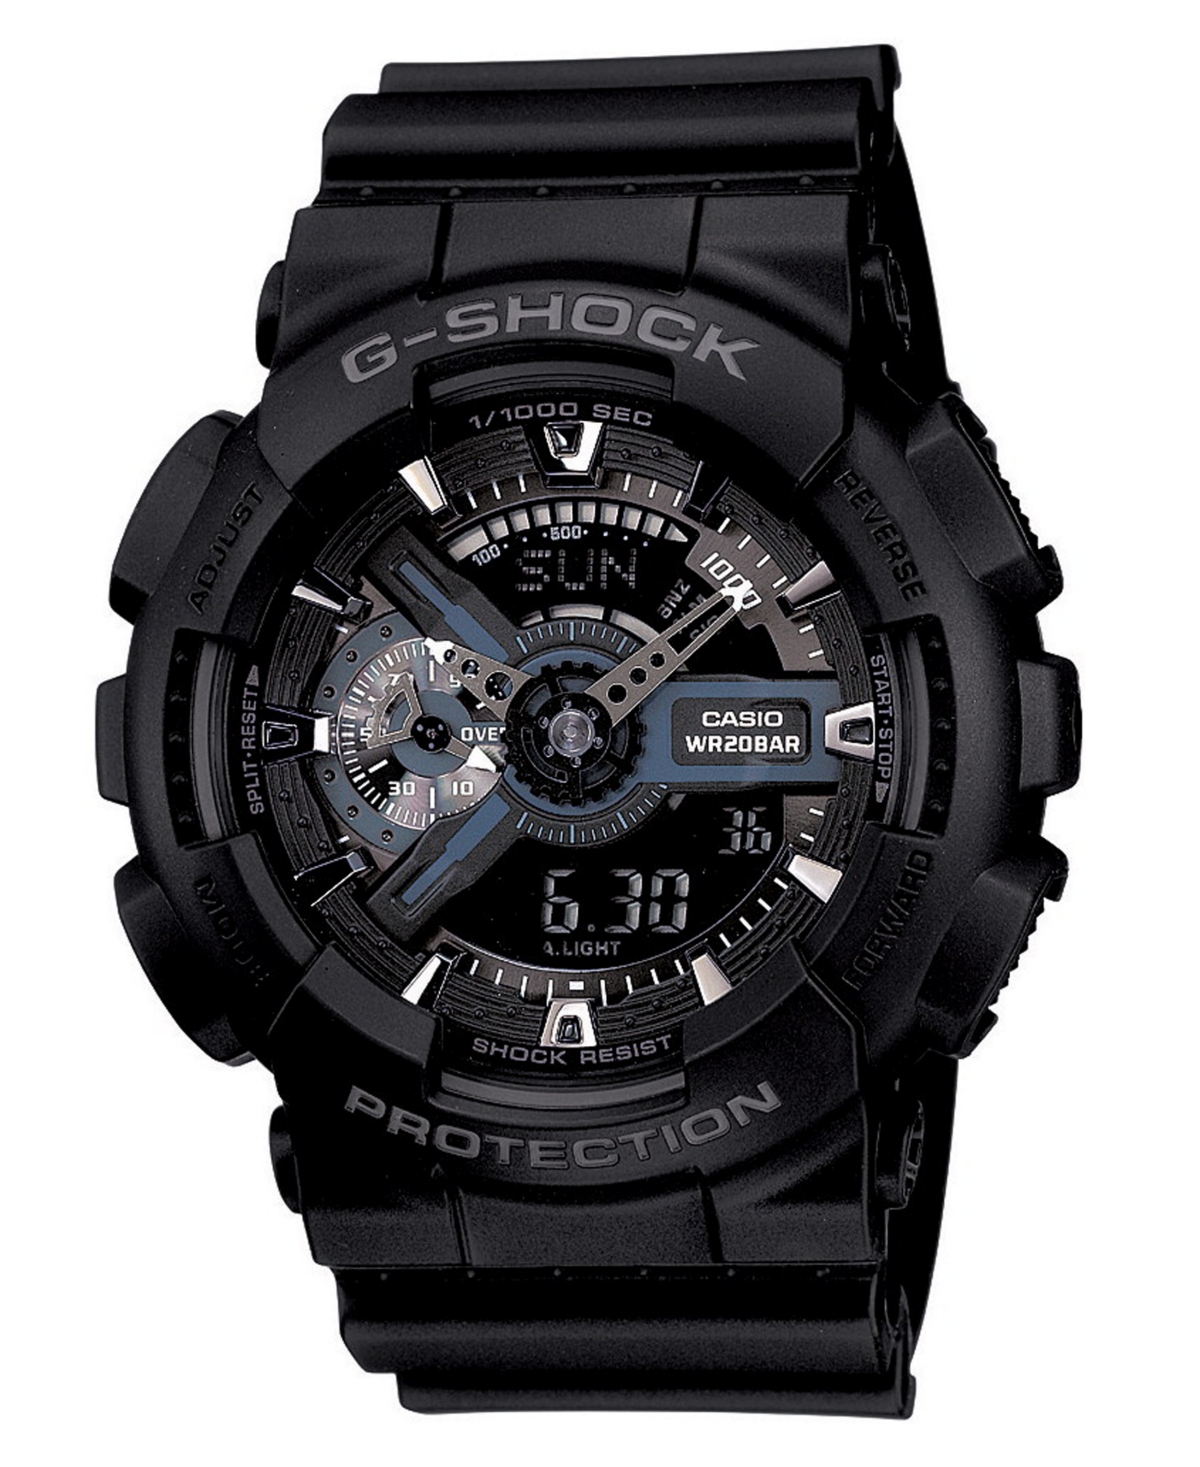 Men's Analog Digital Black Resin Strap Watch, 55mm GA110-1B - Black